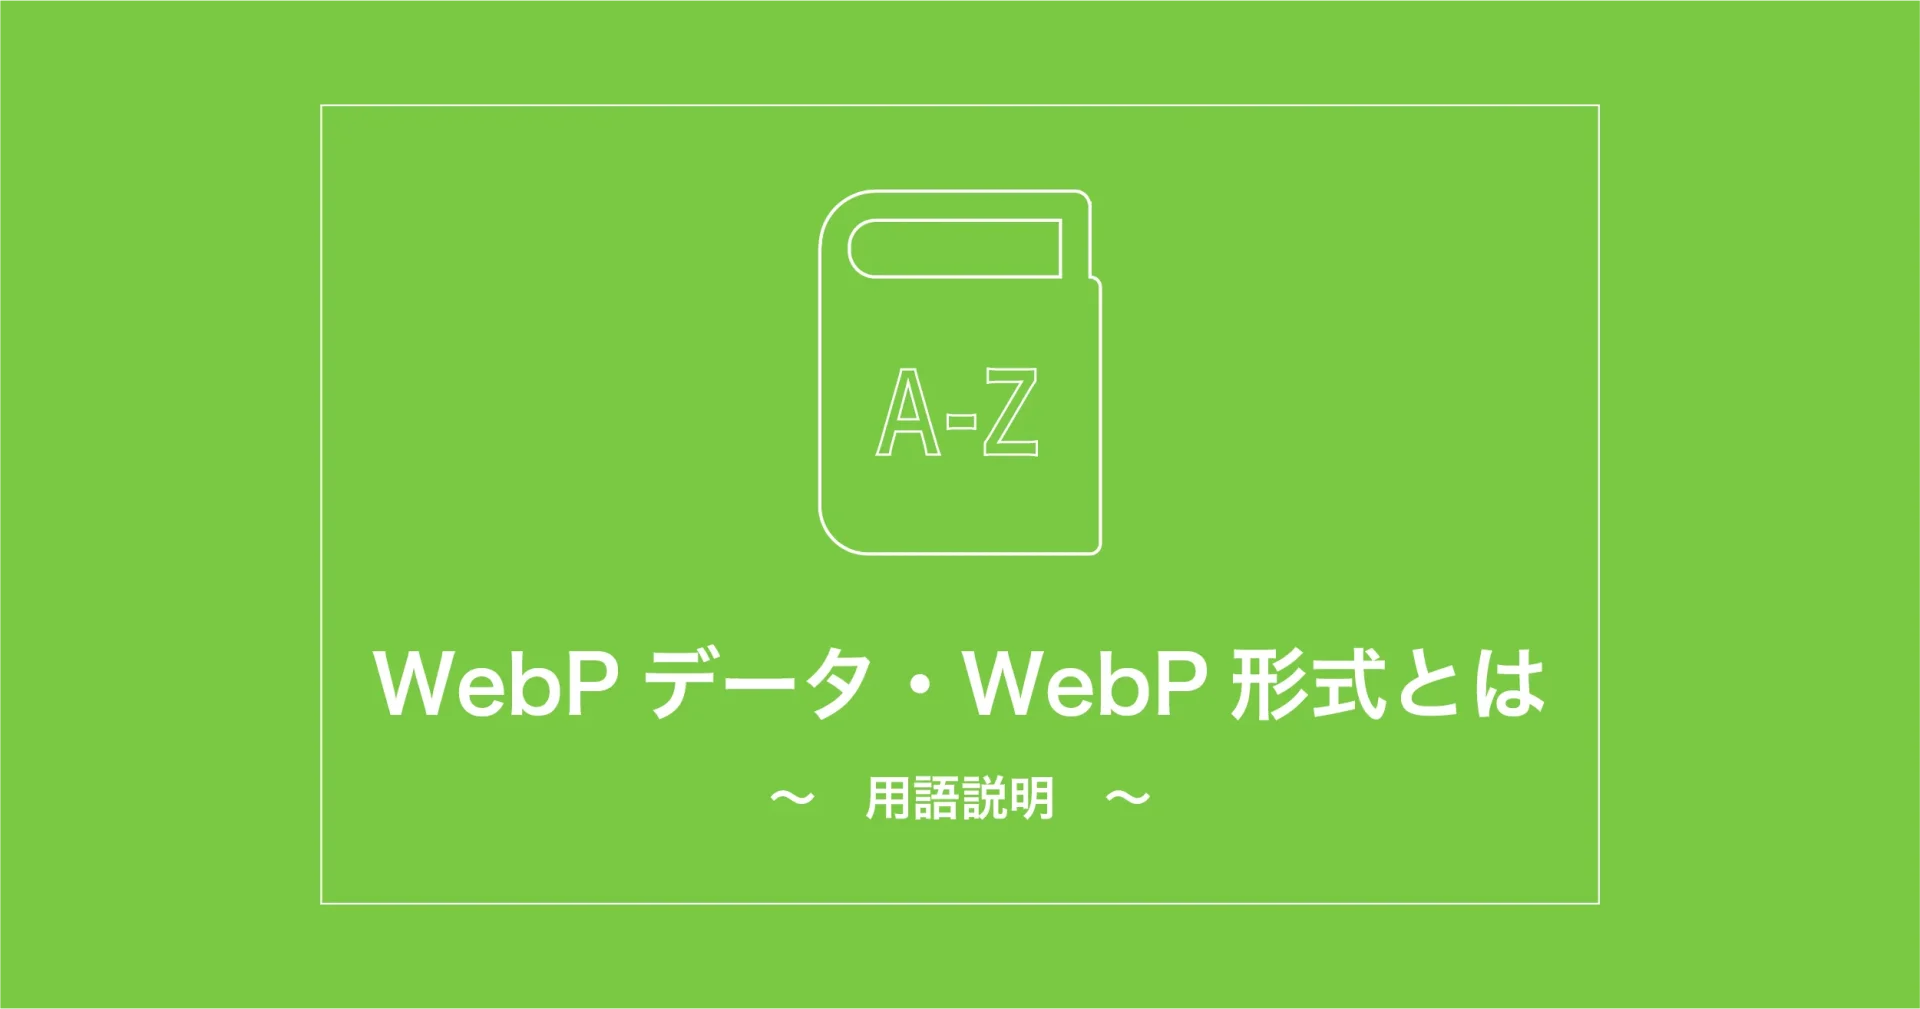 WebPデータ・WebP形式とは